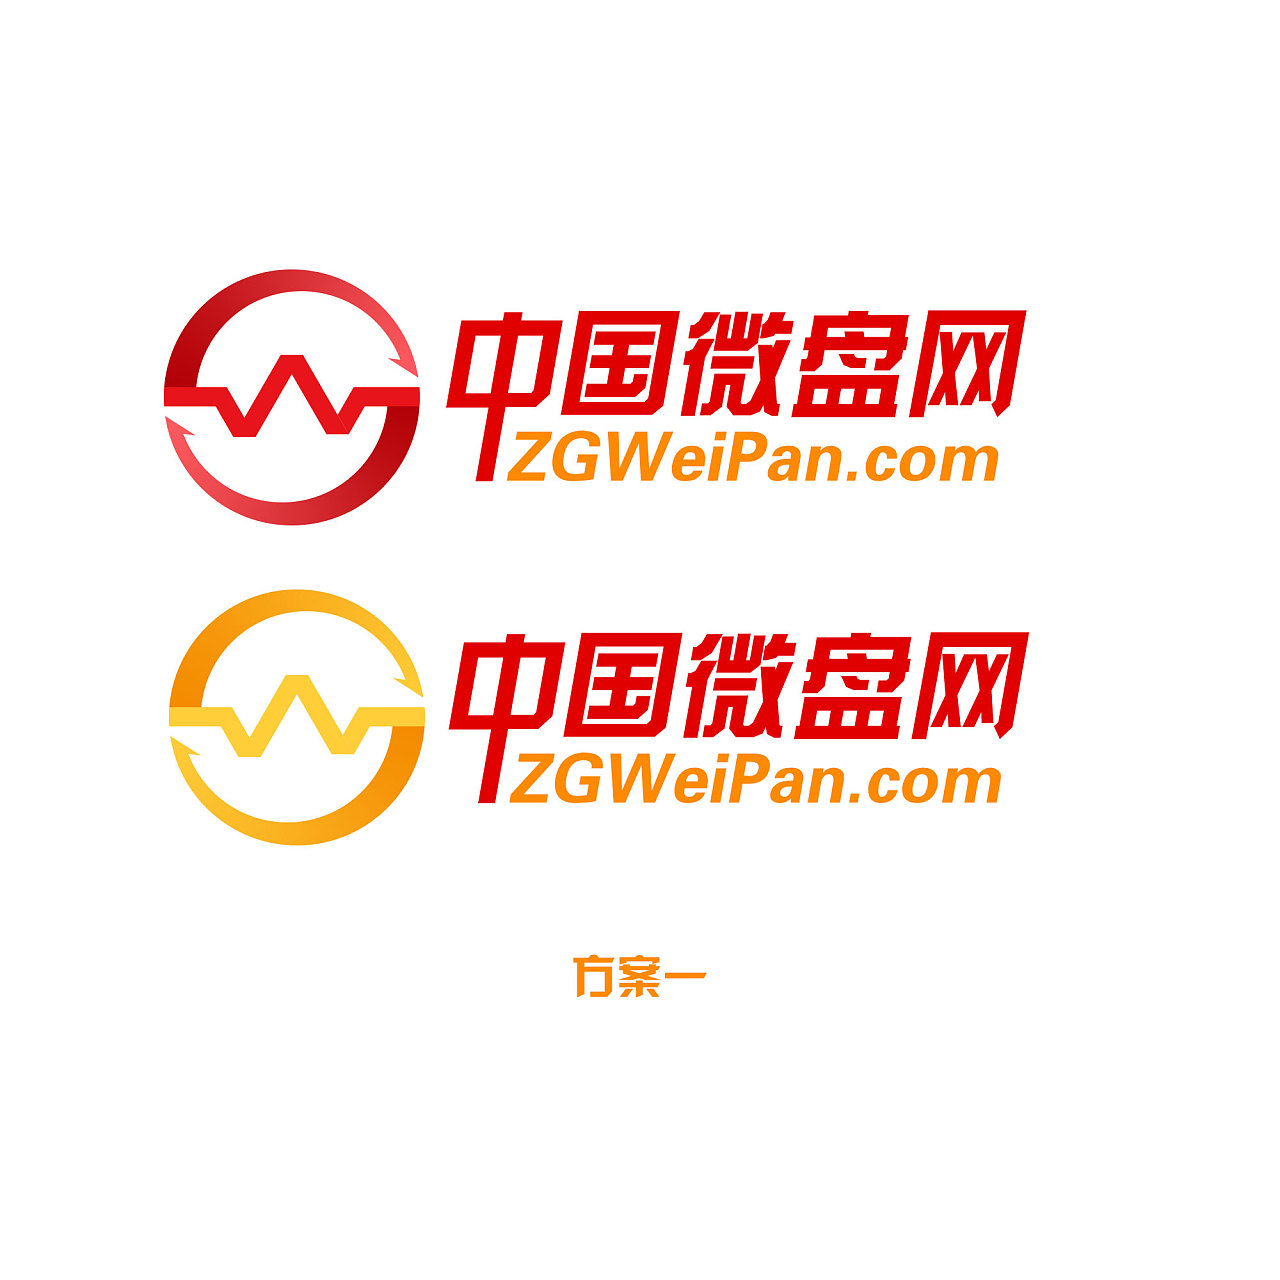 门户网站中国微盘网zgweipan.com网站logo|平